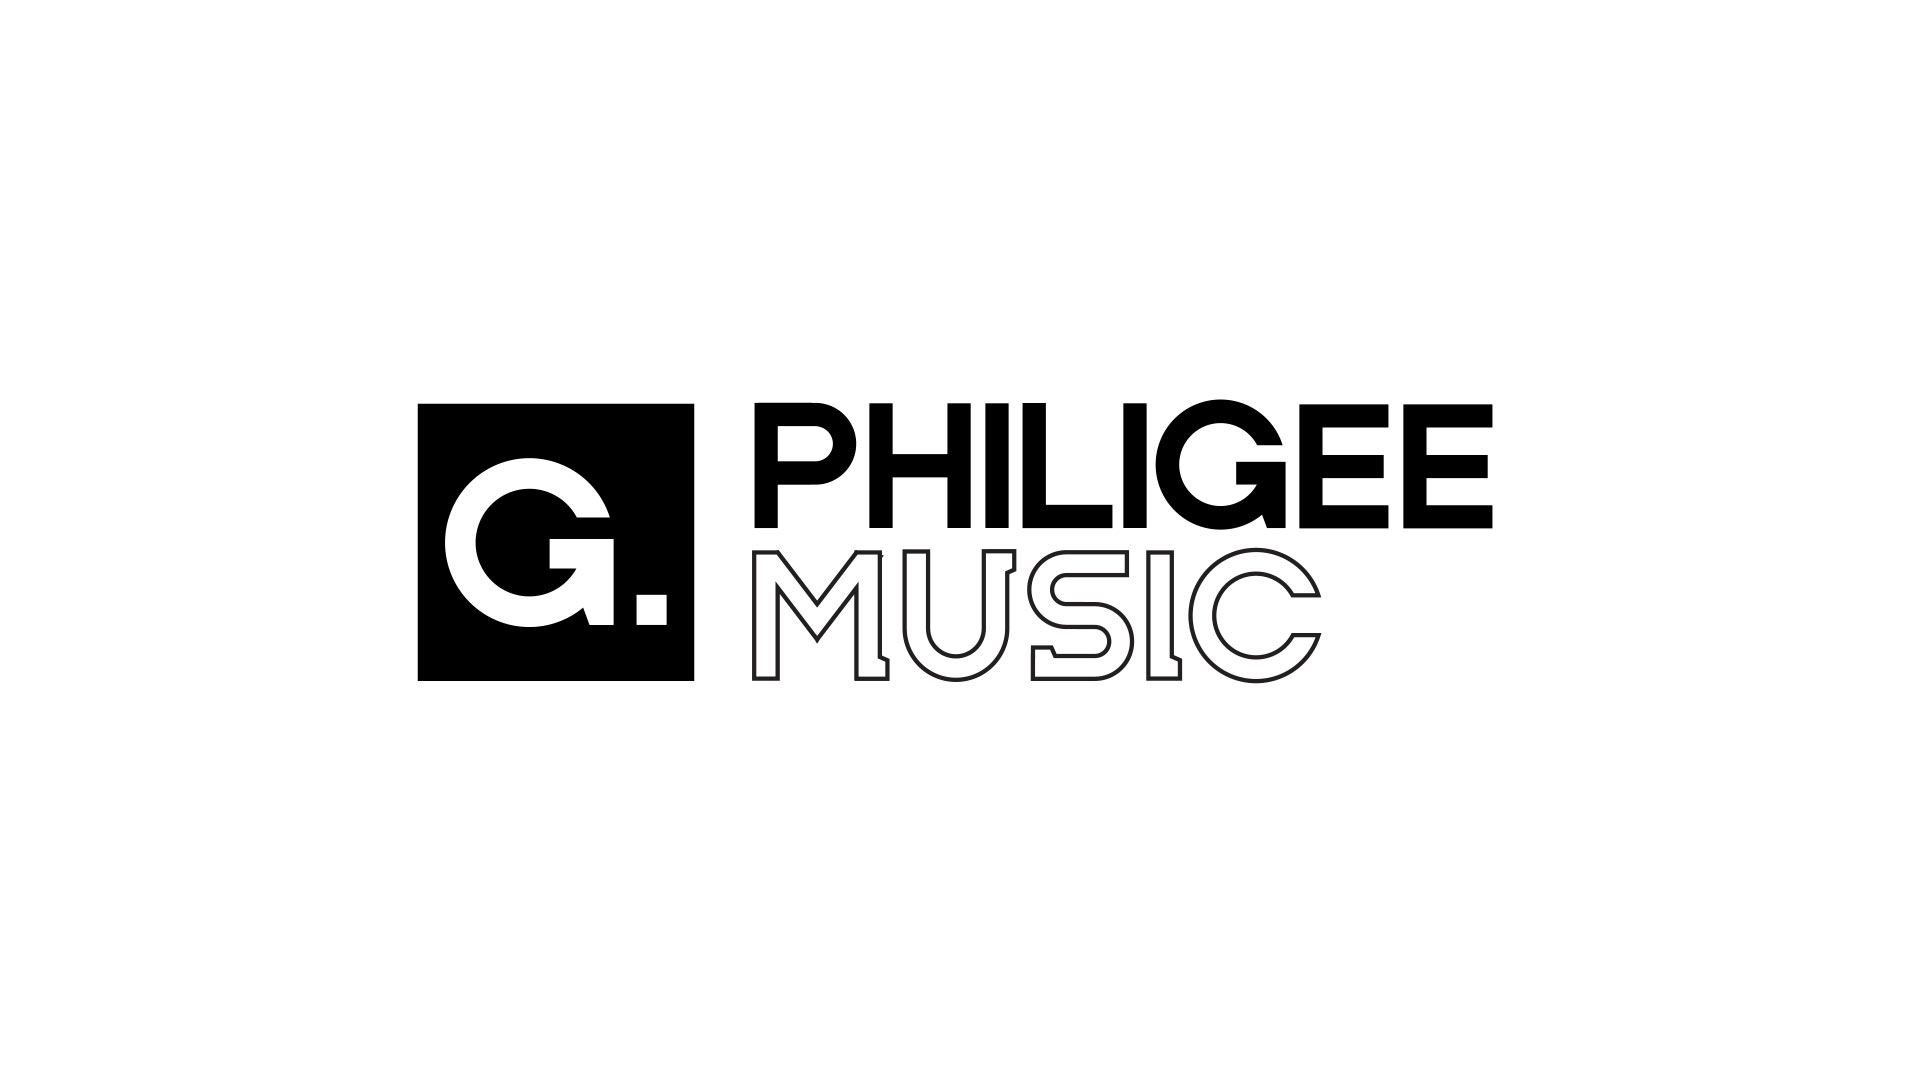 Philigee Music Logo Black